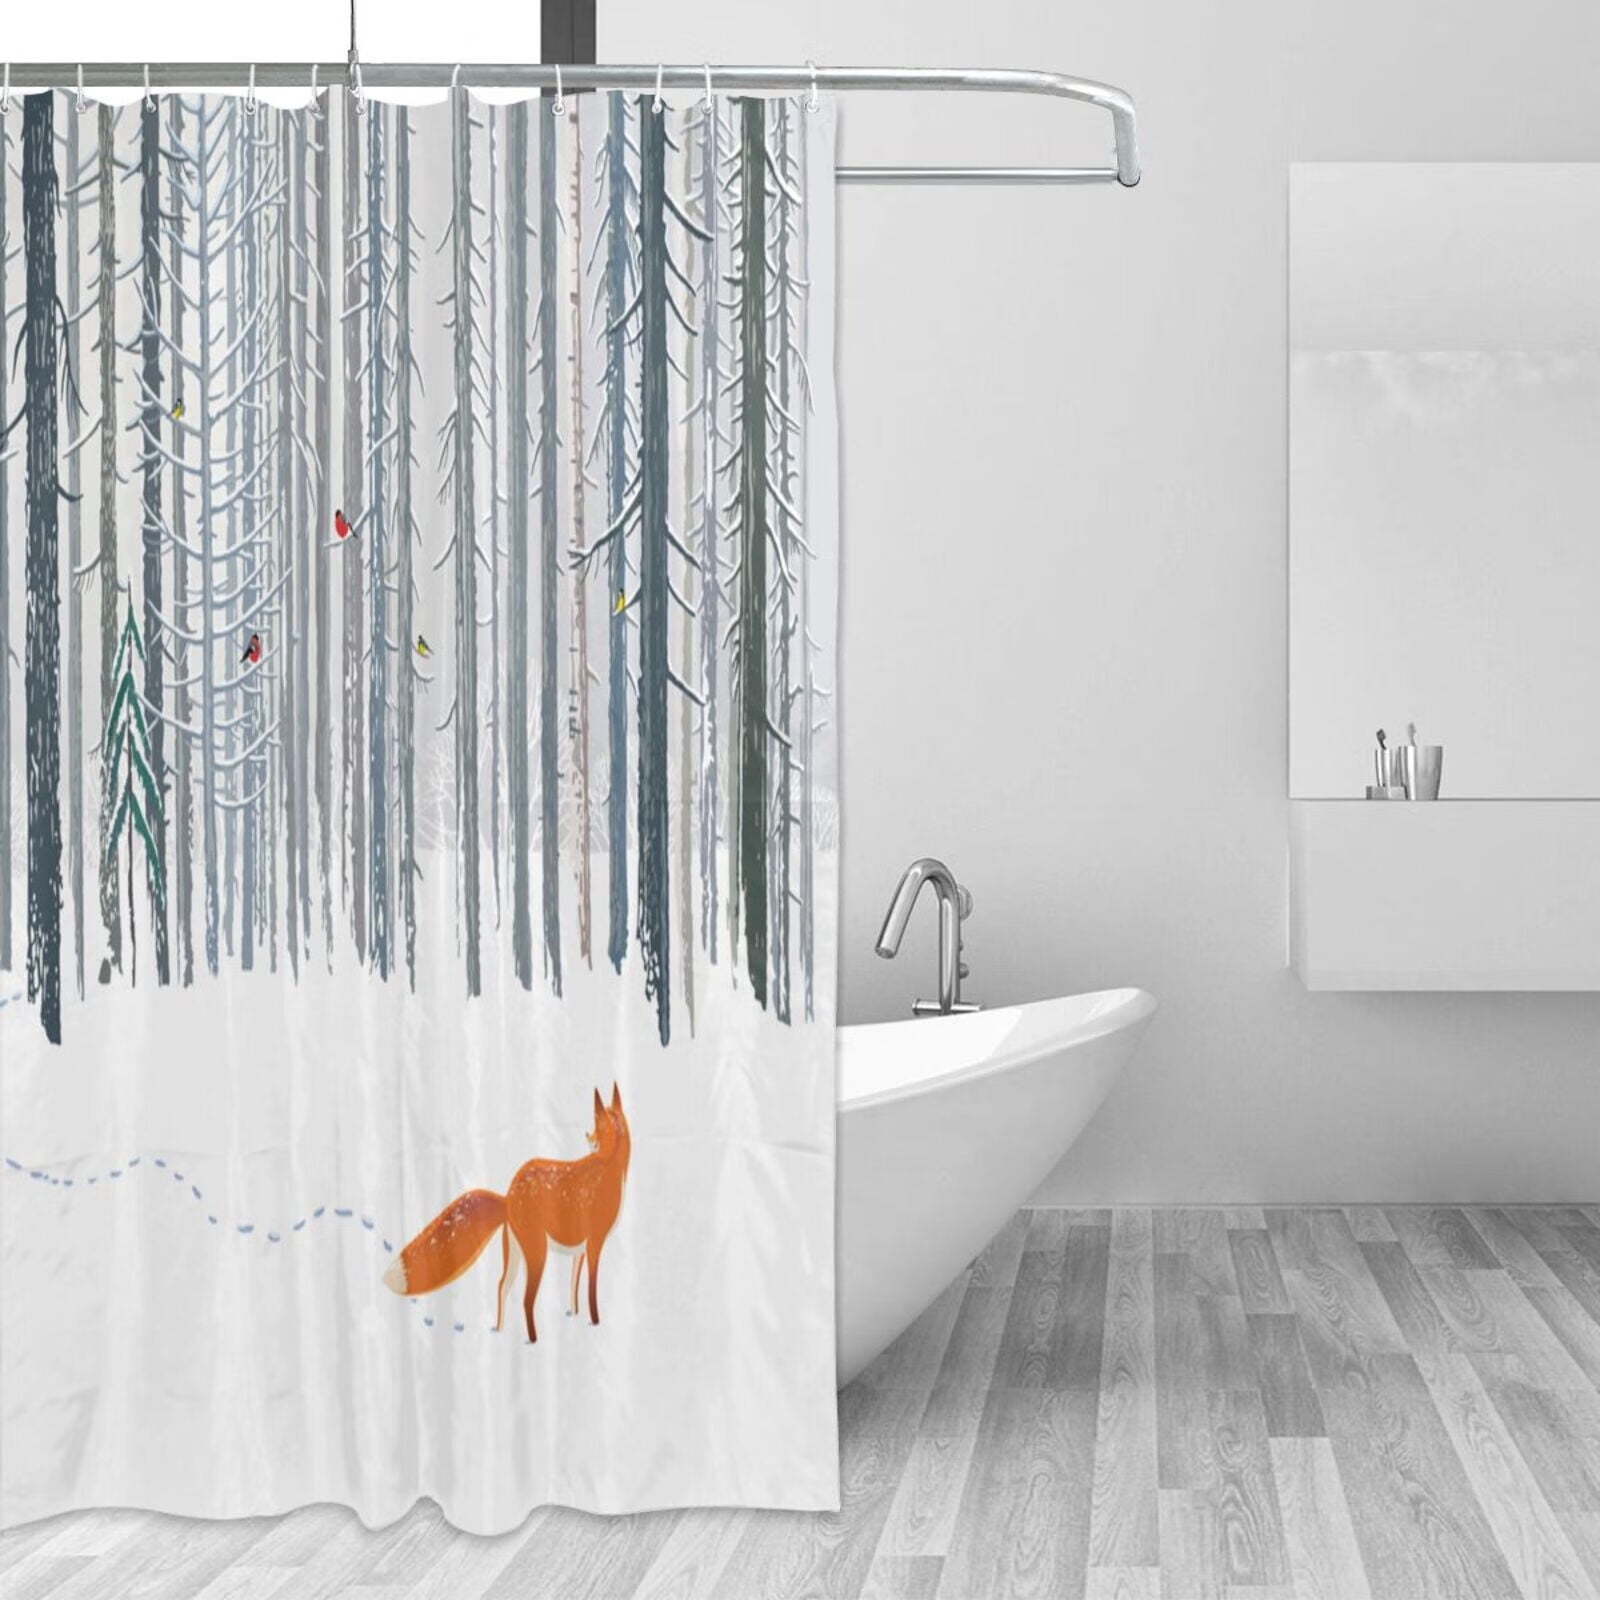 JOOCAR Winter Forest Shower Curtain for Bathroom, Snow Covered Pine Trees  Winter Season Animal Red Fox and Cardinals Idyllic Seasonal Scenery Fabric